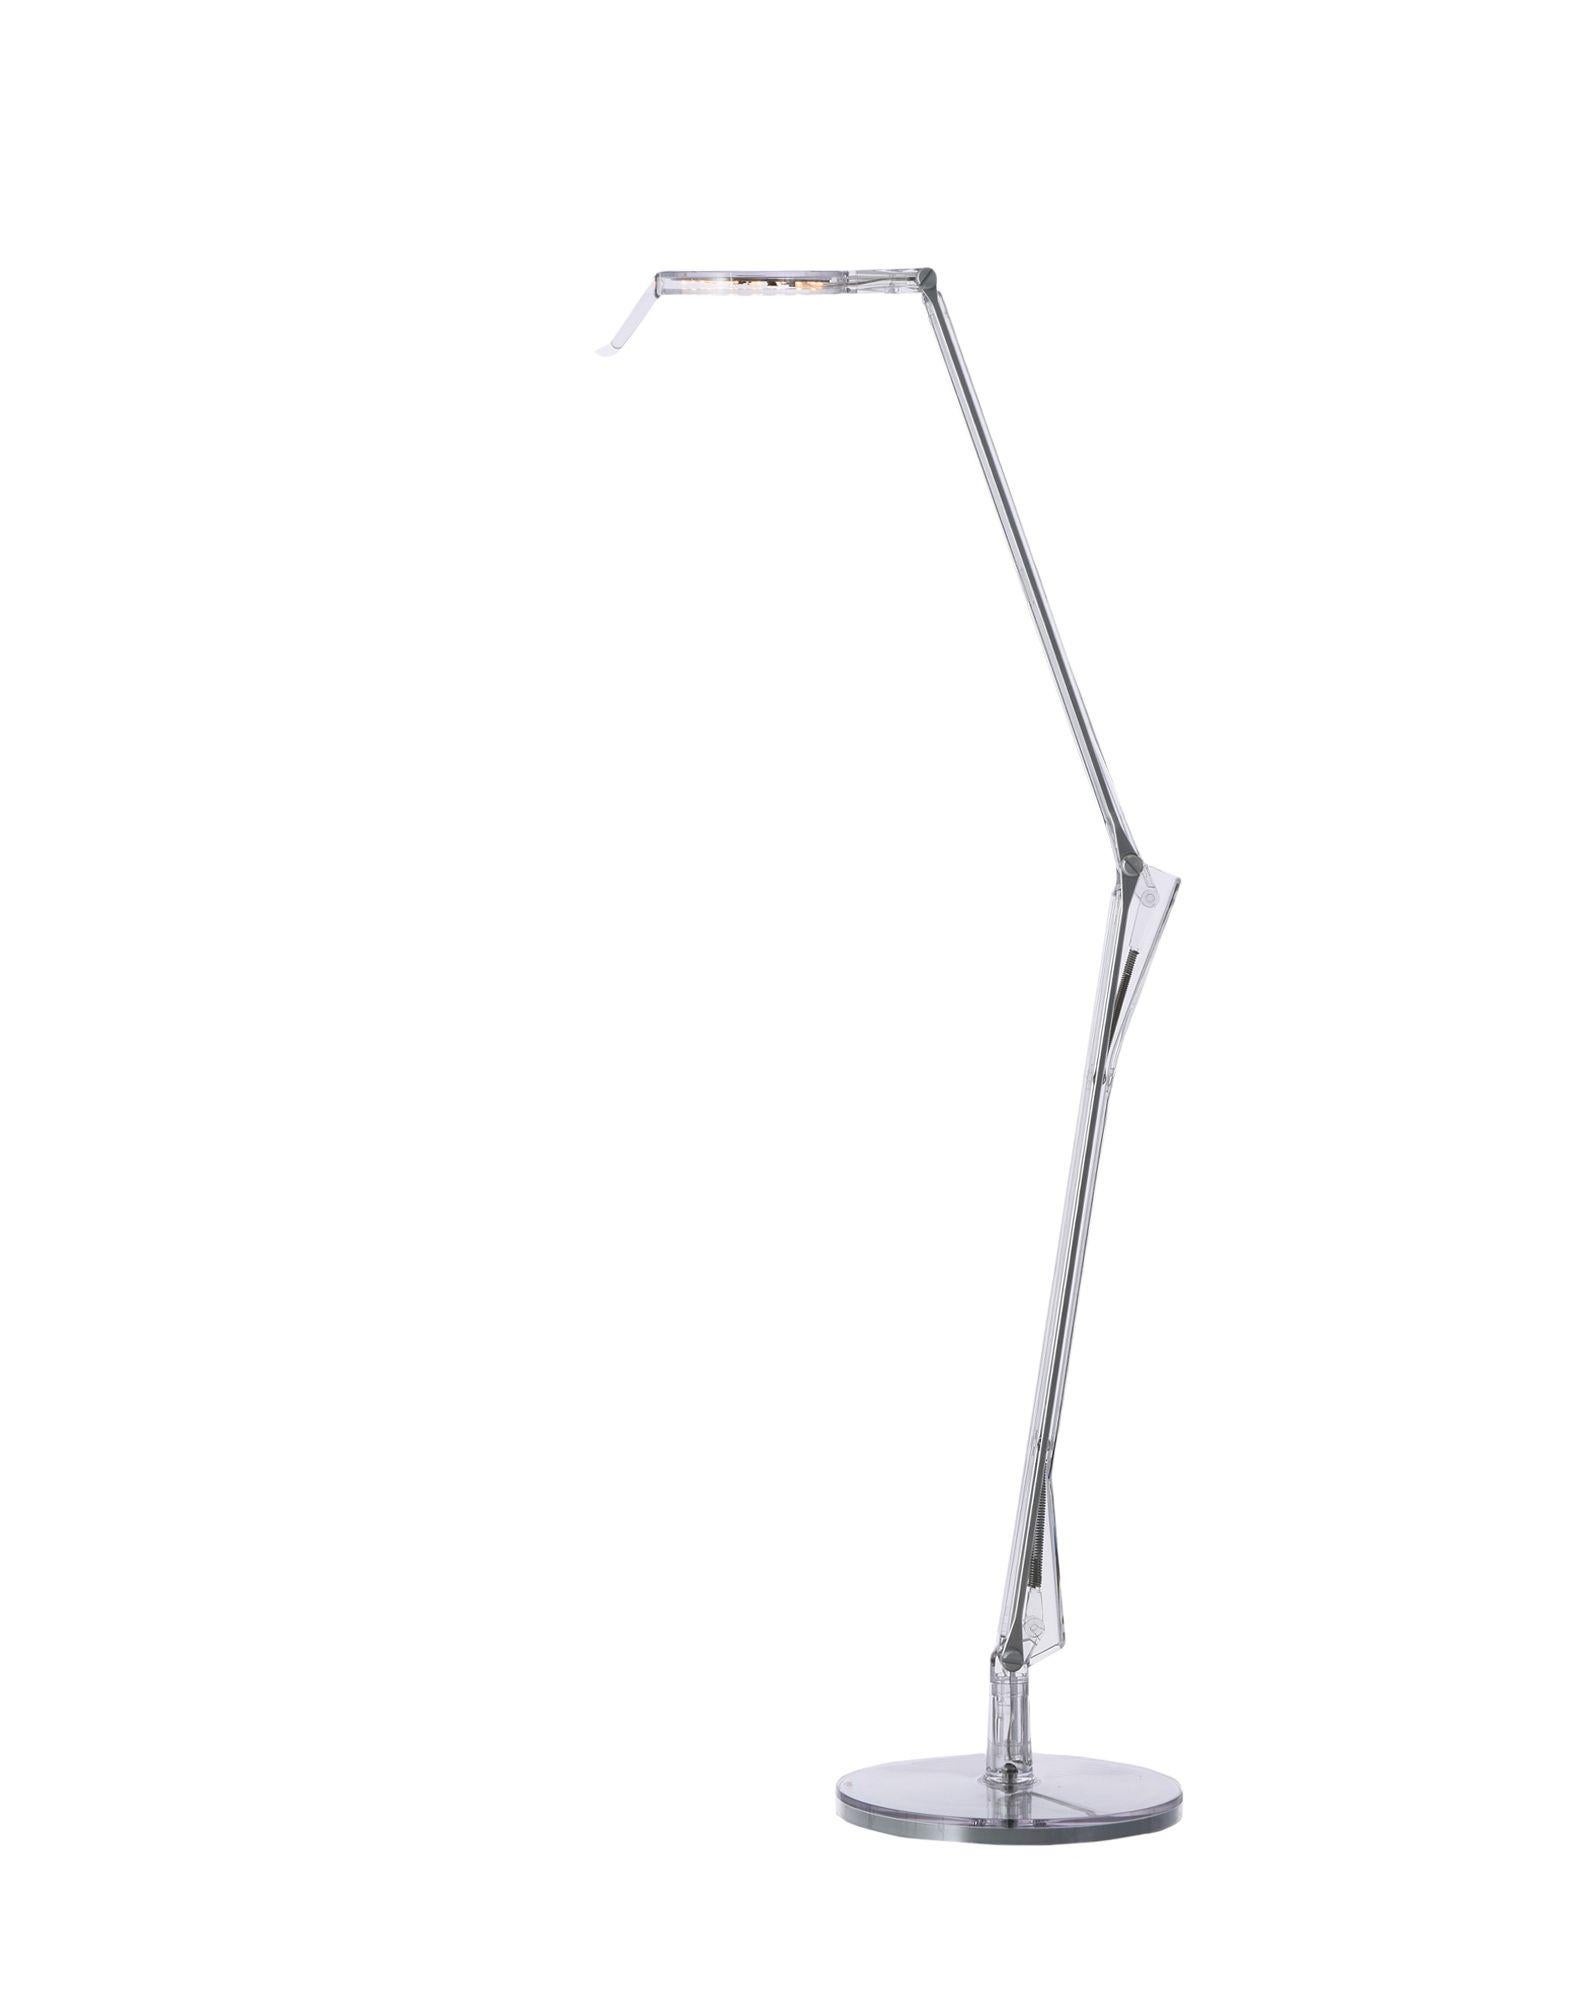 Italian Kartell Aledin Dec Desk Lamp in Crystal by Alberto e Francesco Meda For Sale